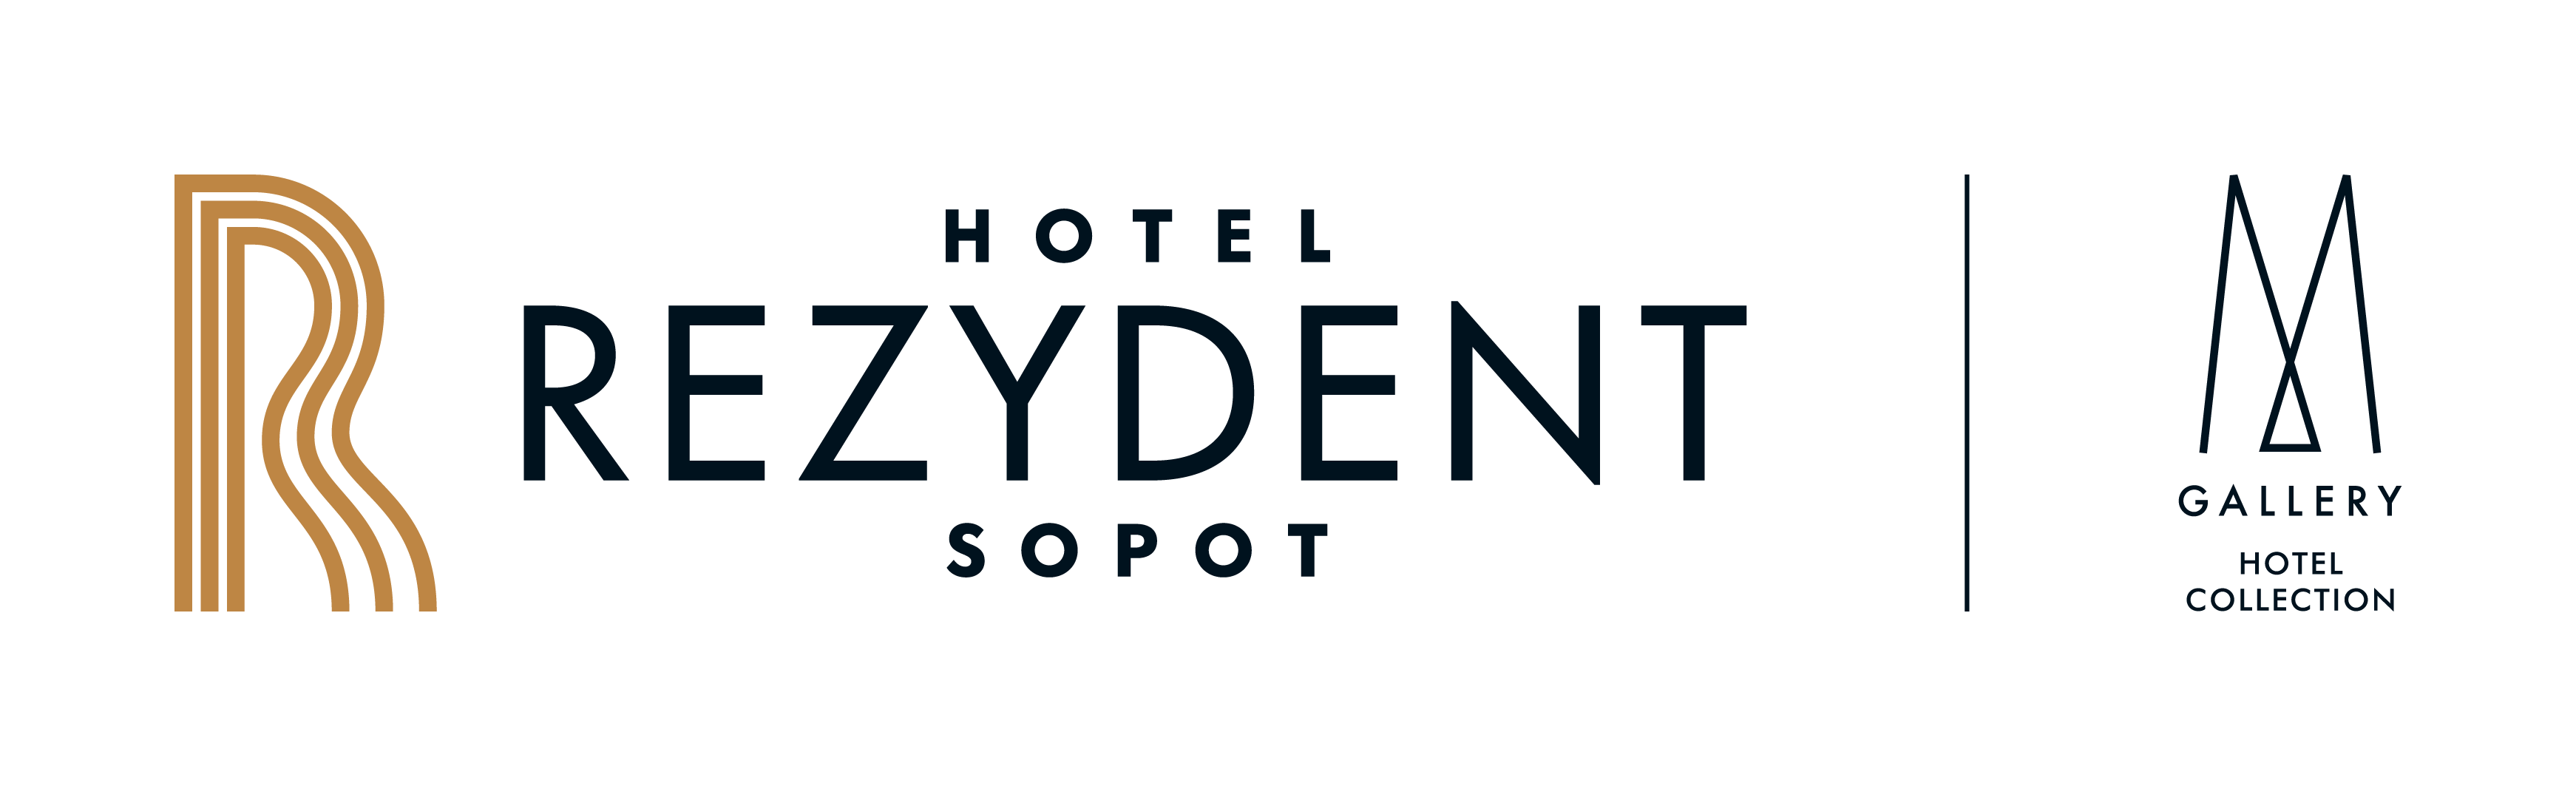 hotel-rezydent-sopot-znak-RGB_h gold M.png